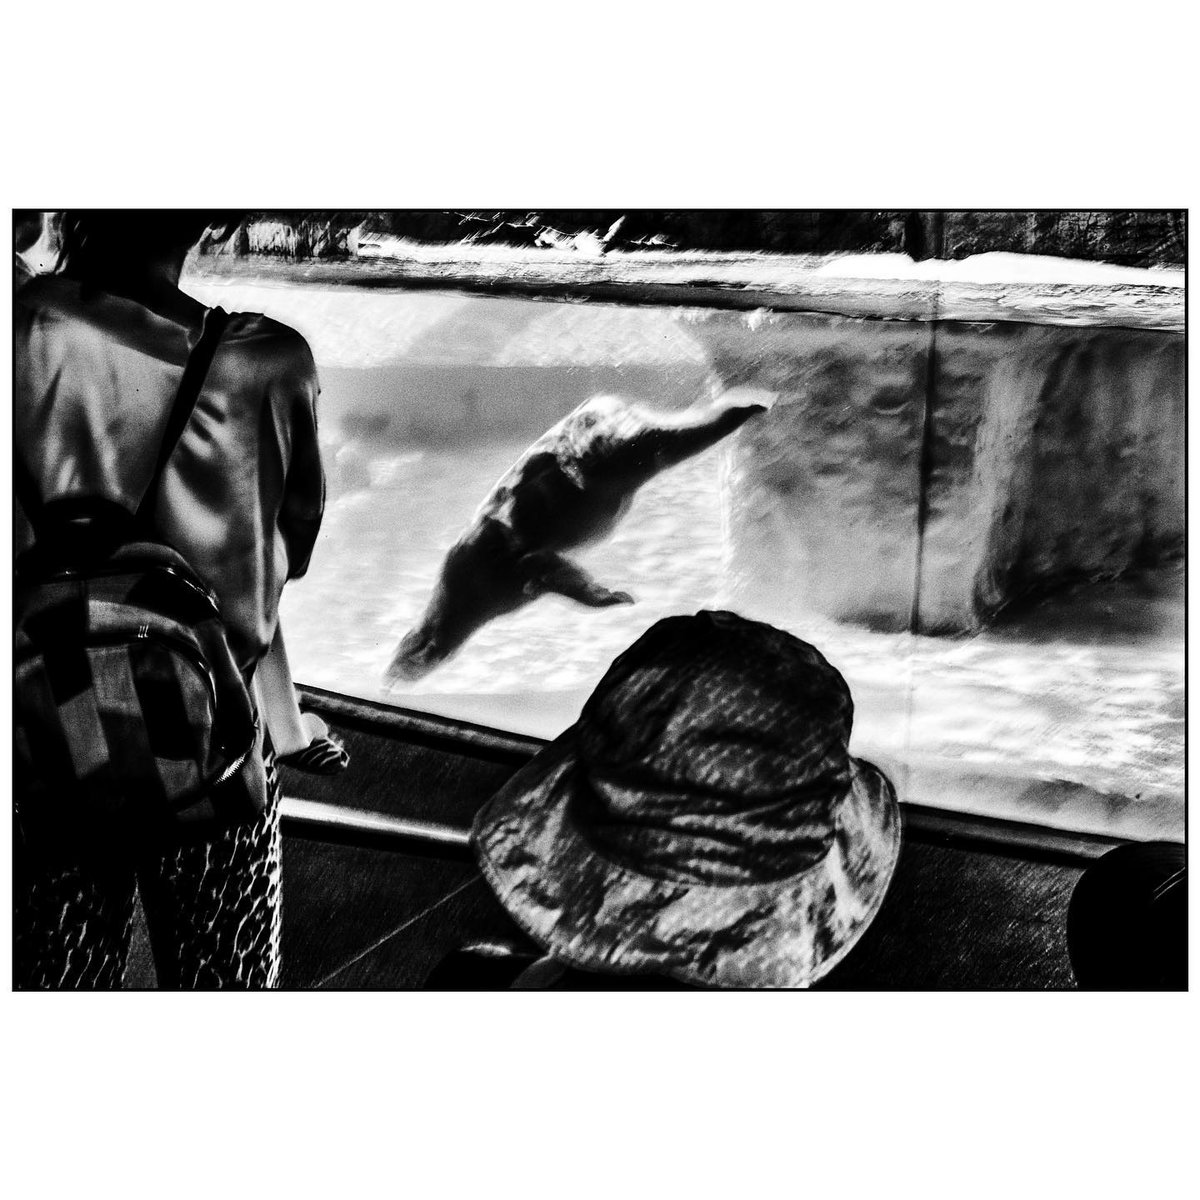 A child watches the world’s only tropical polar bear. Singapore zoo.

#polarbear #singaporezoo #singapore #conservation #streetsaustralia #HCSC_street #streetmoment #aussiestreetphotography #street_avengers #streetshooter #aussiestreet22 #streetsacademy #ihsp #spjstreets #streett